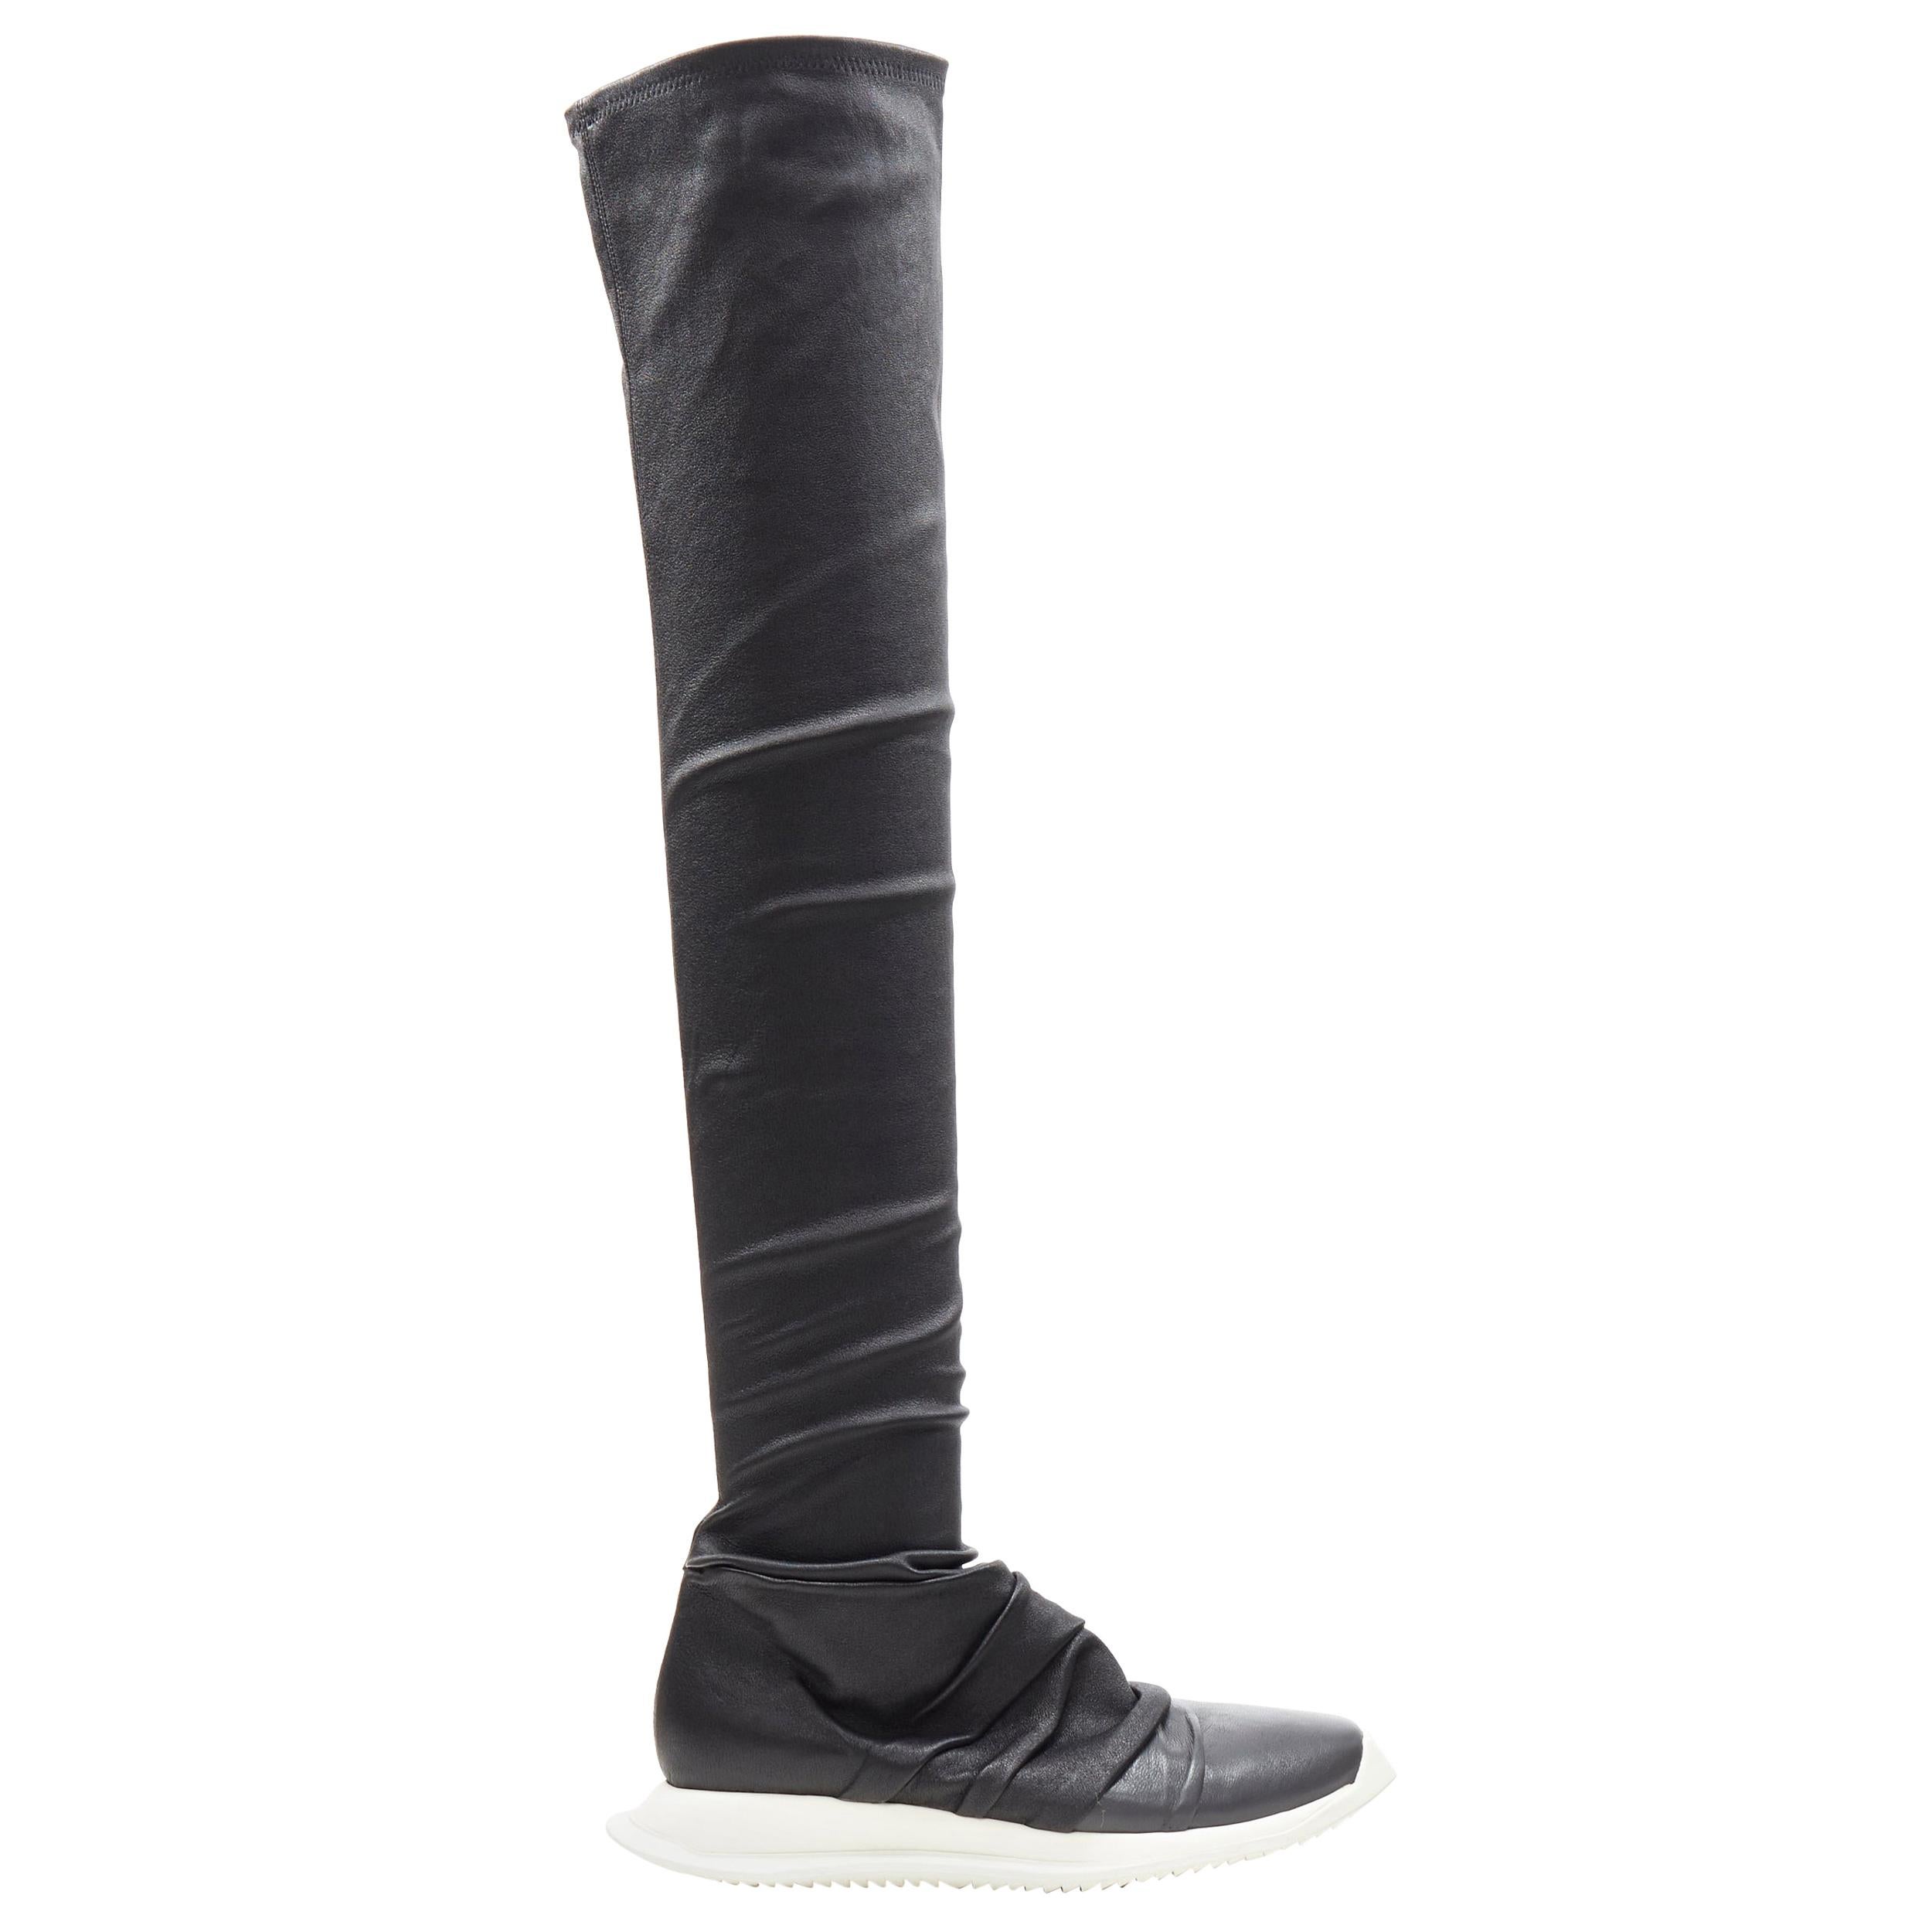 new RICK OWENS Draped Olique Runner Stocking black knee high sneaker boots EU37